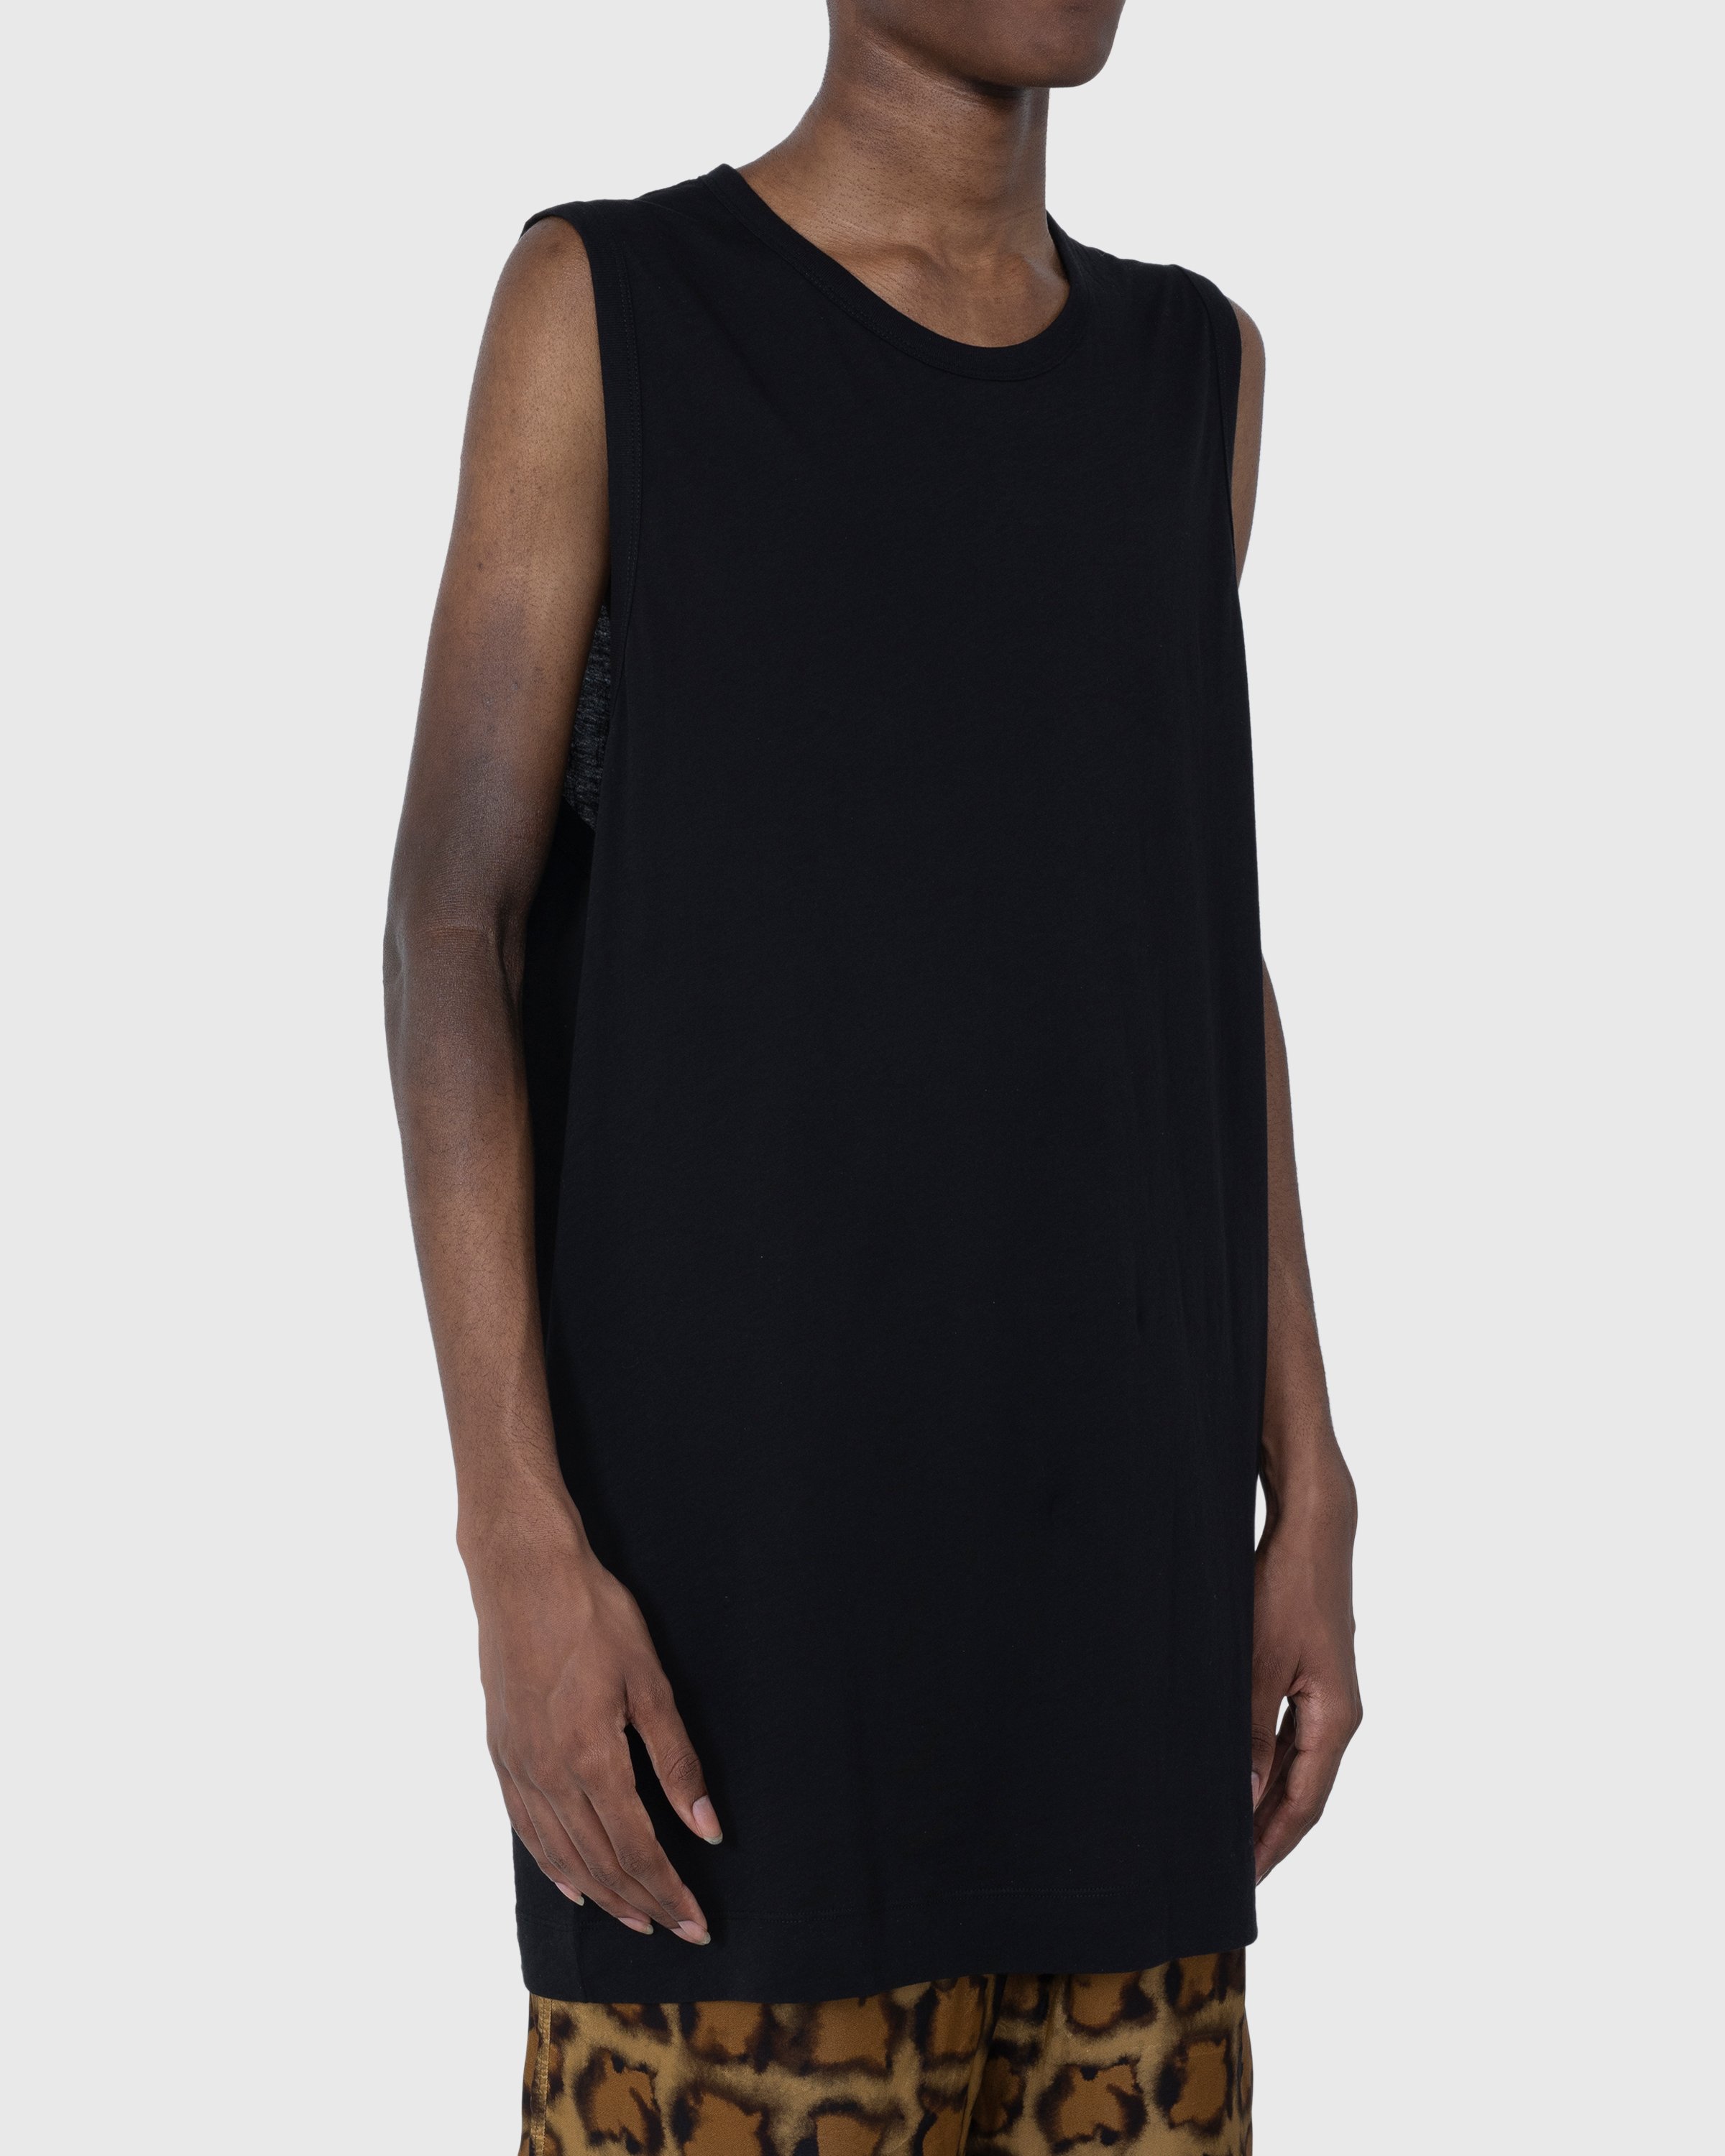 Dries van Noten - Hanator Sleeveless T-Shirt Black - Clothing - Black - Image 3